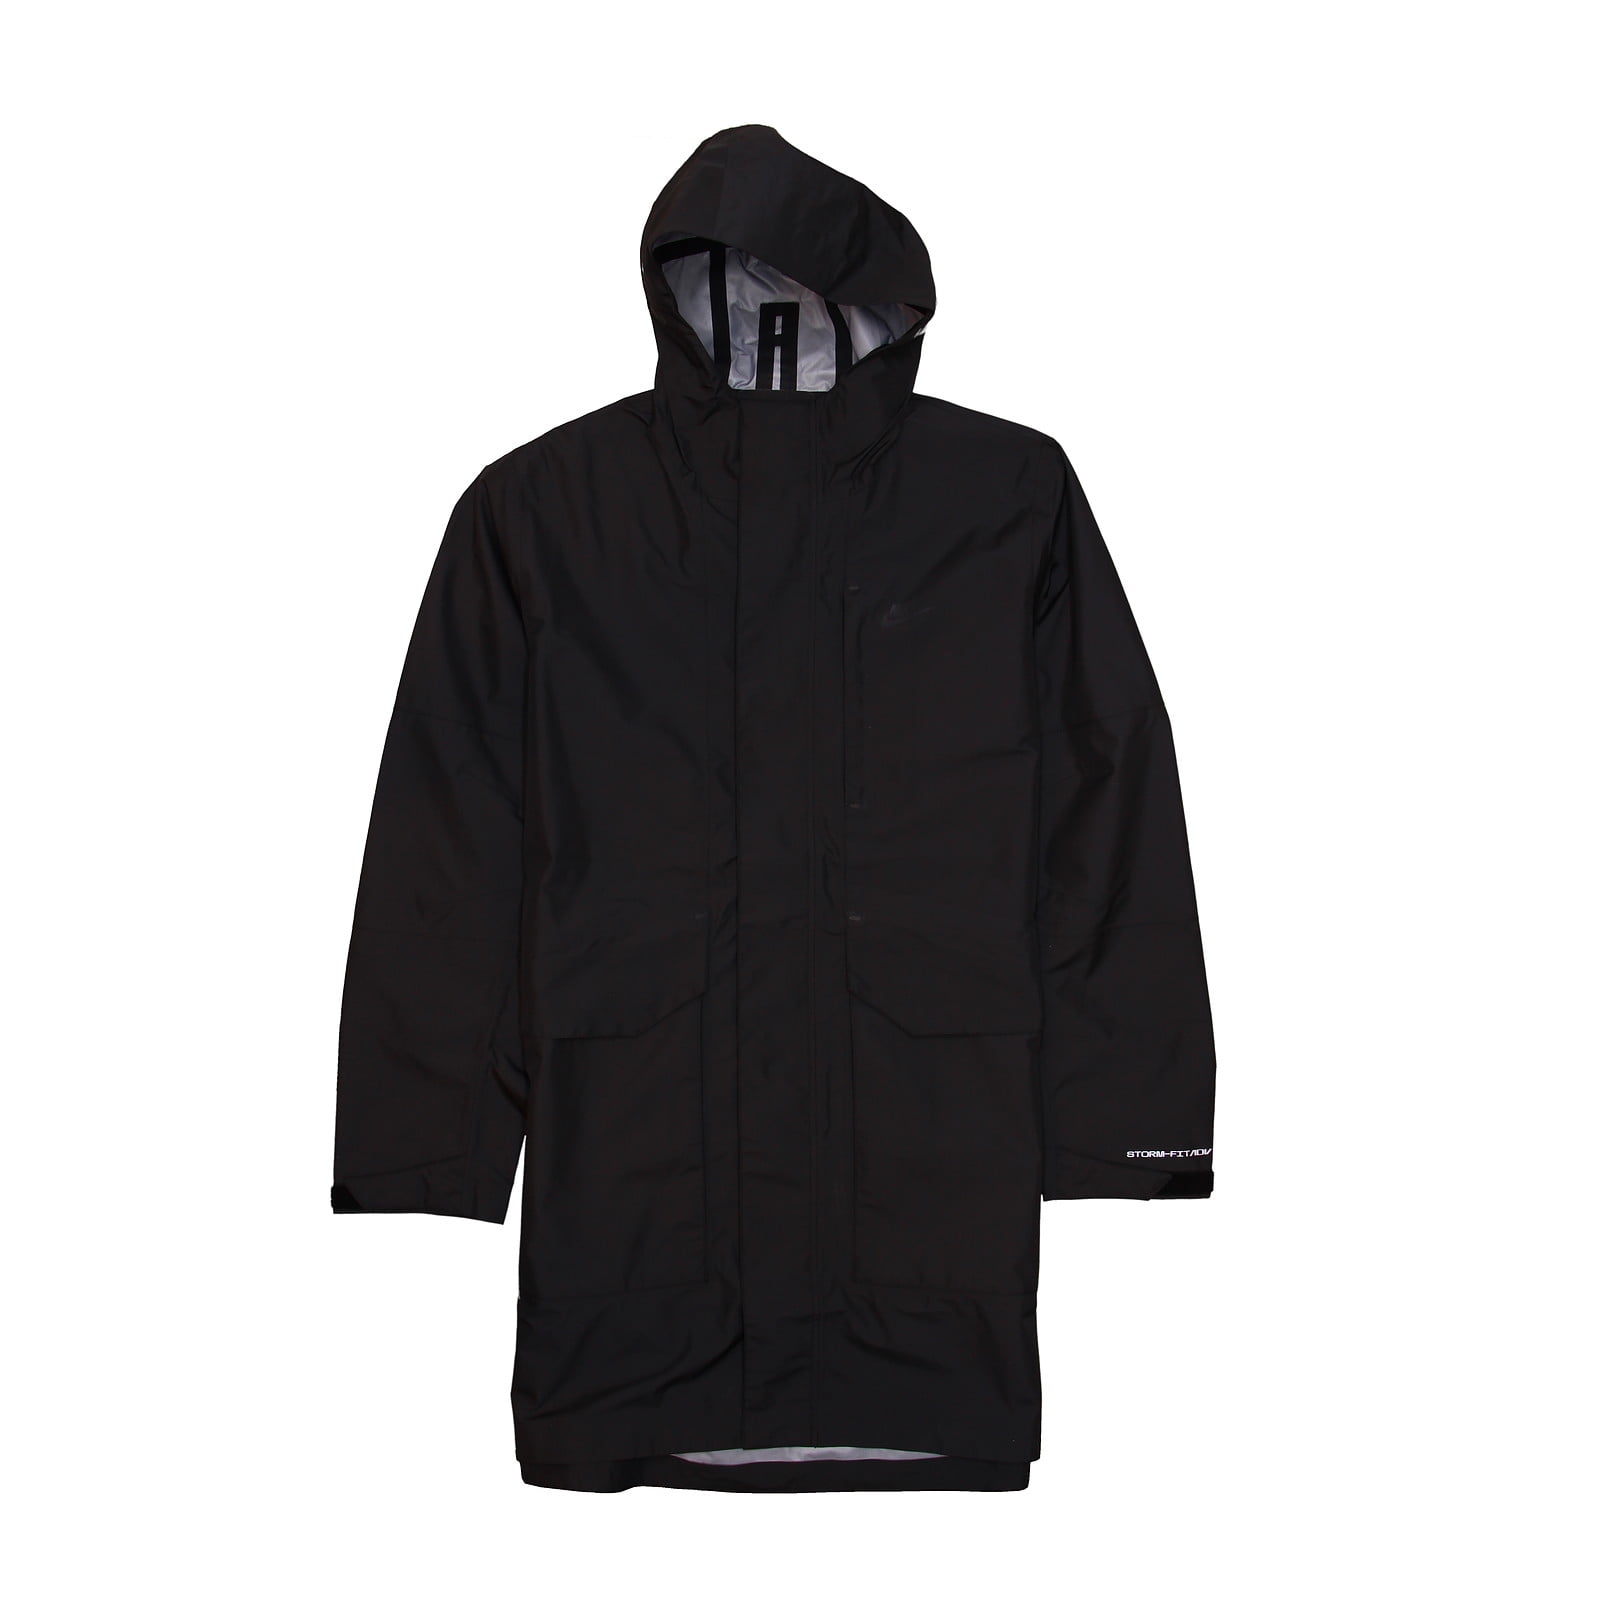 Jacket Nike Parka Sportswear Shell Black) ADV Storm-Fit (2XLarge, Mens